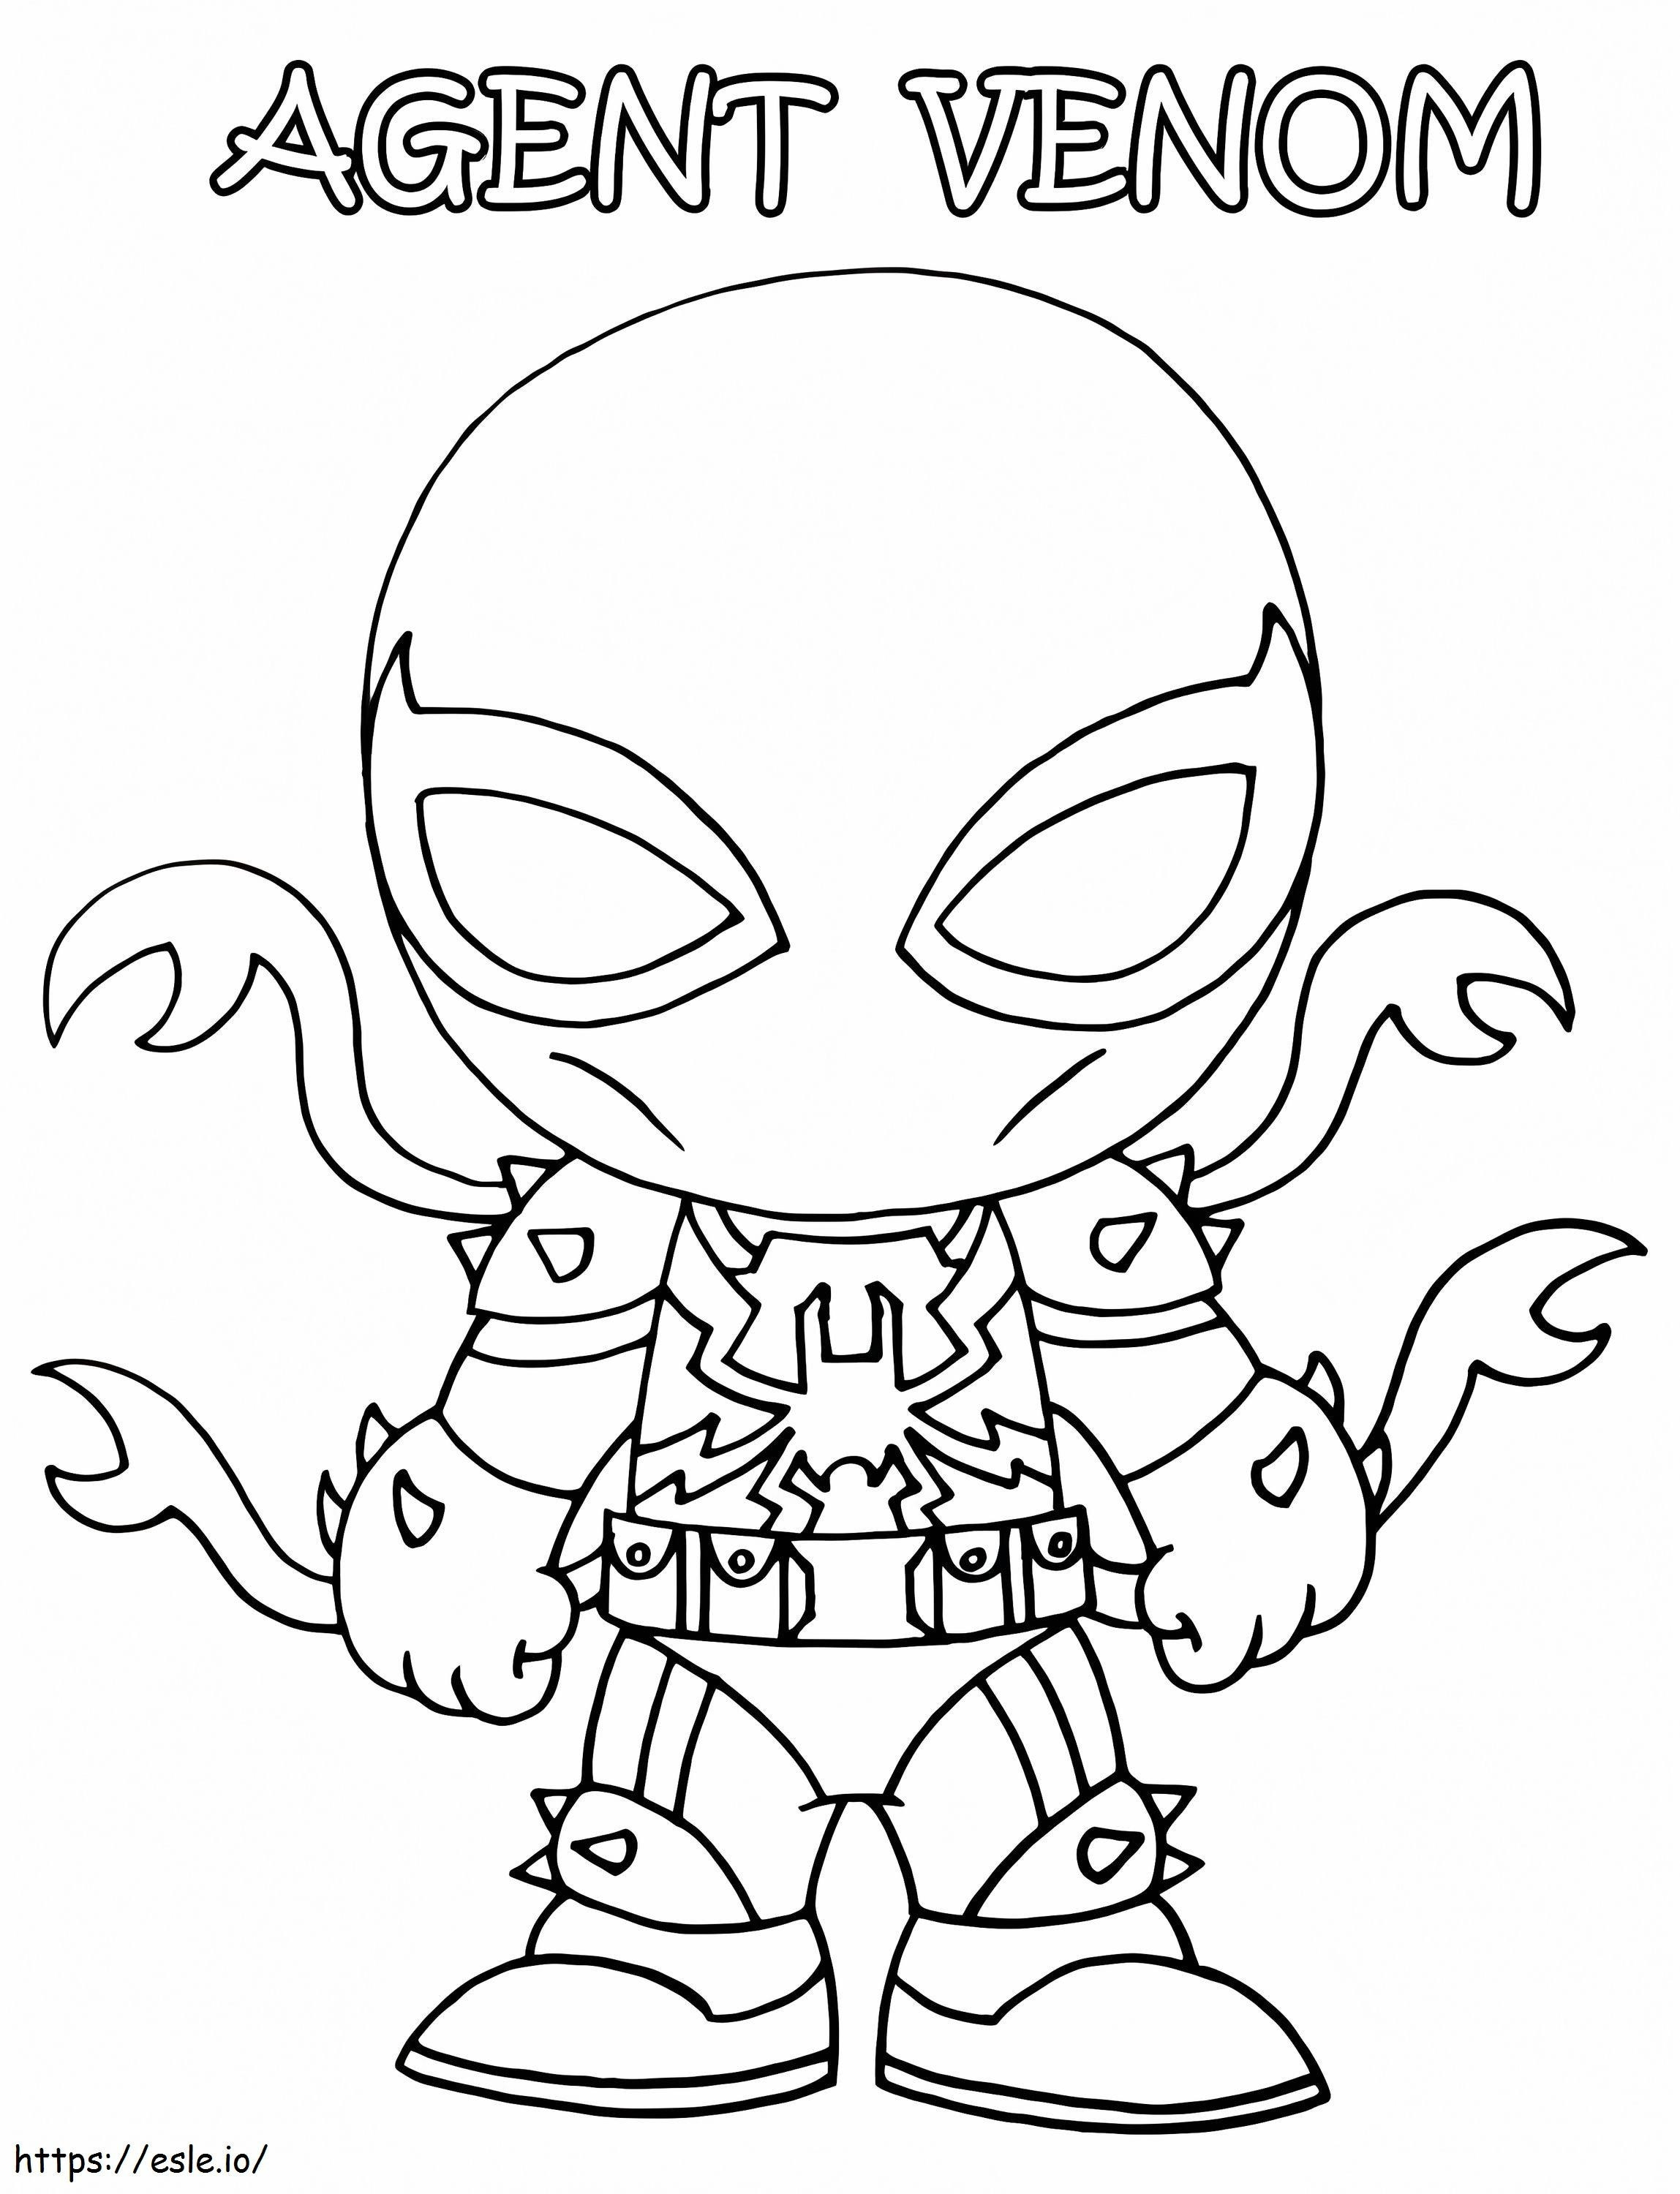 Chibi Agent Venom coloring page